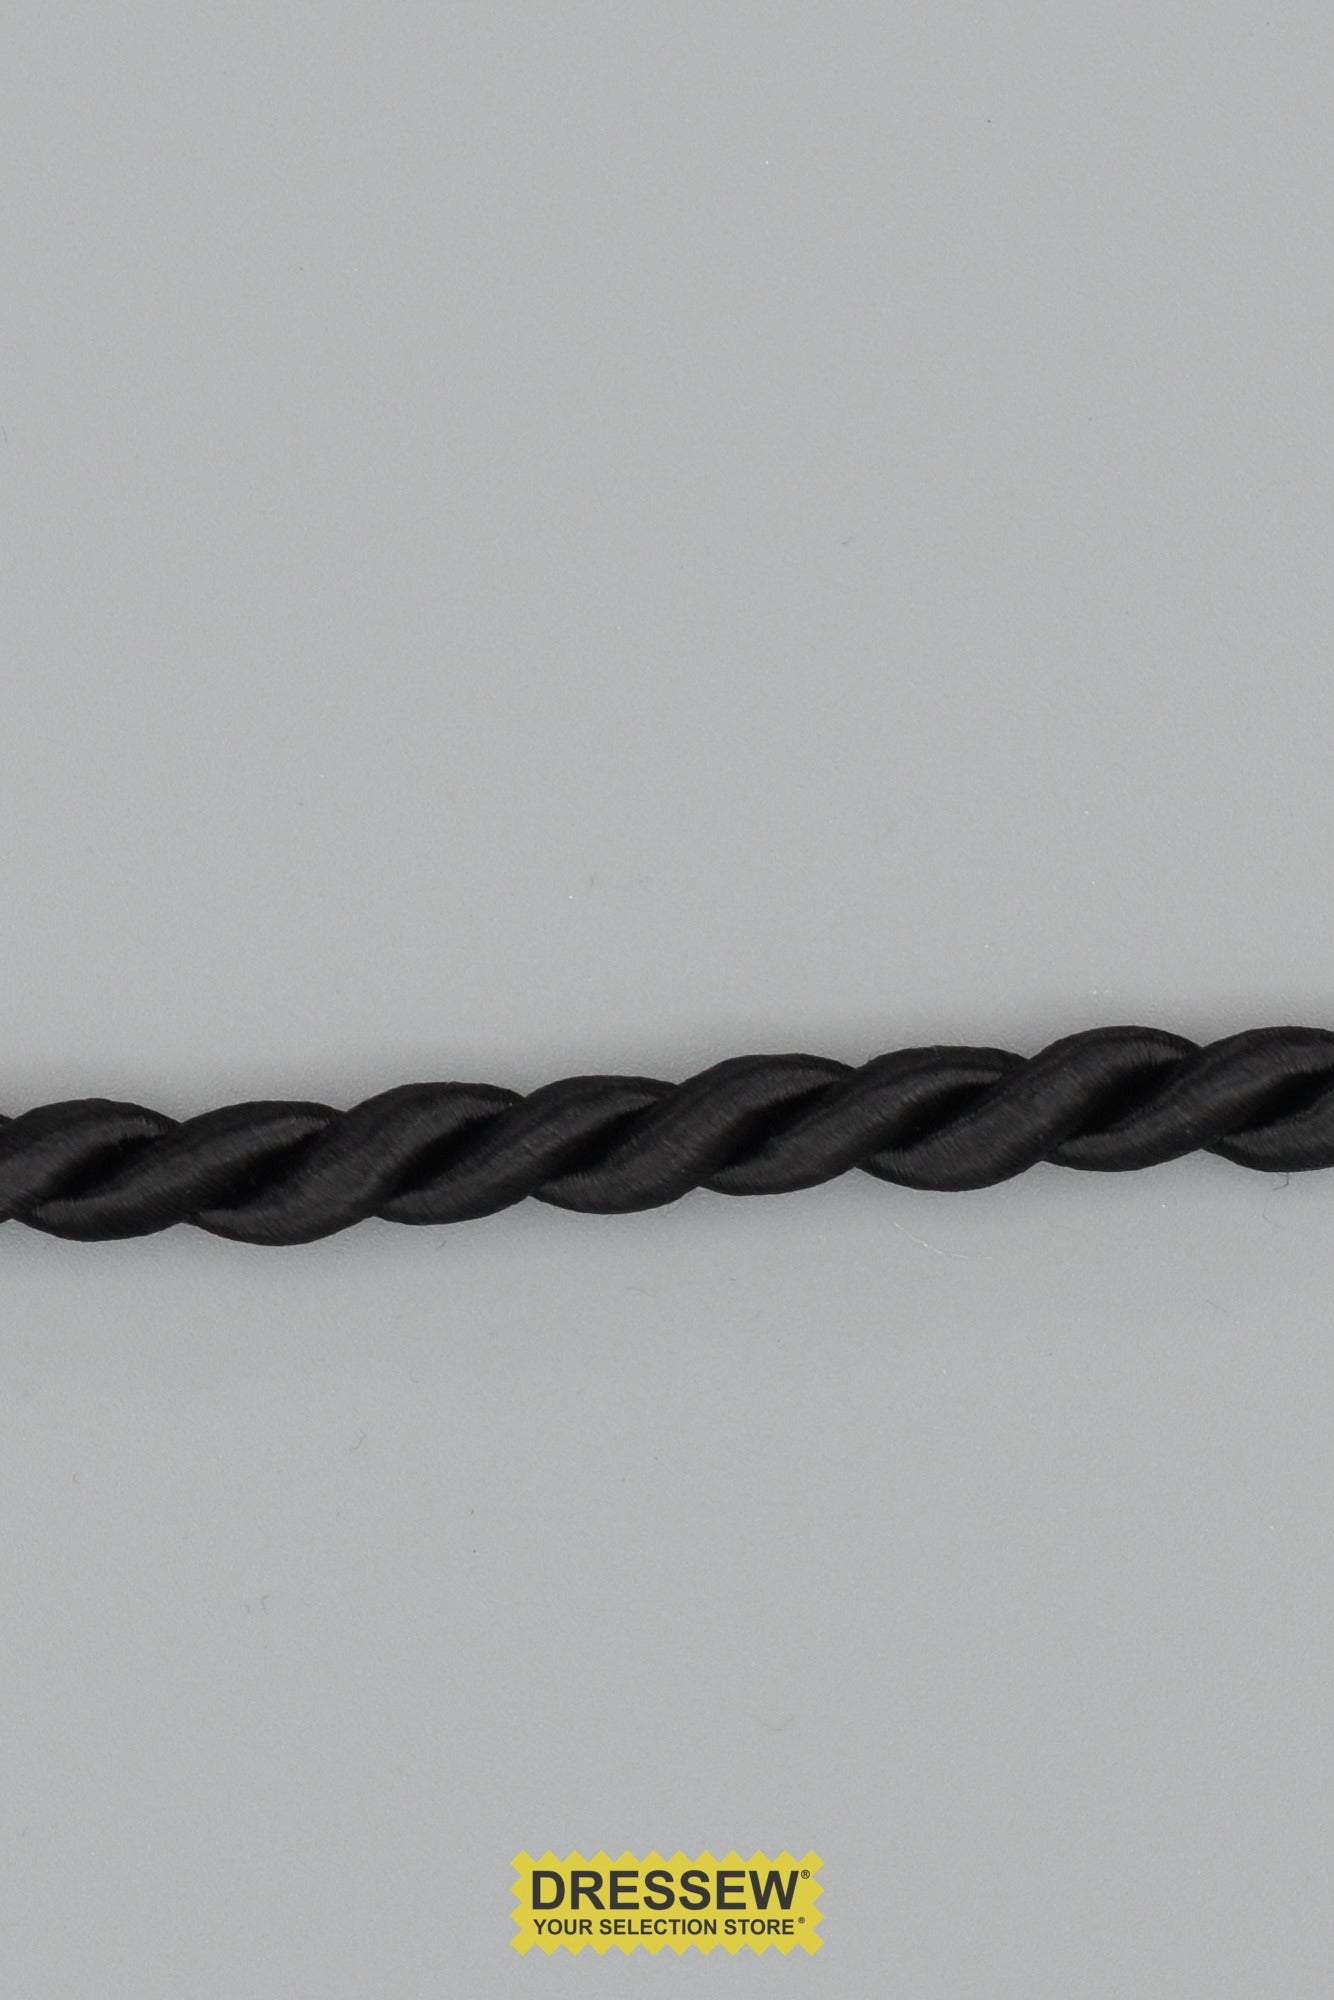 Satin Cord 6mm (1/4") Black